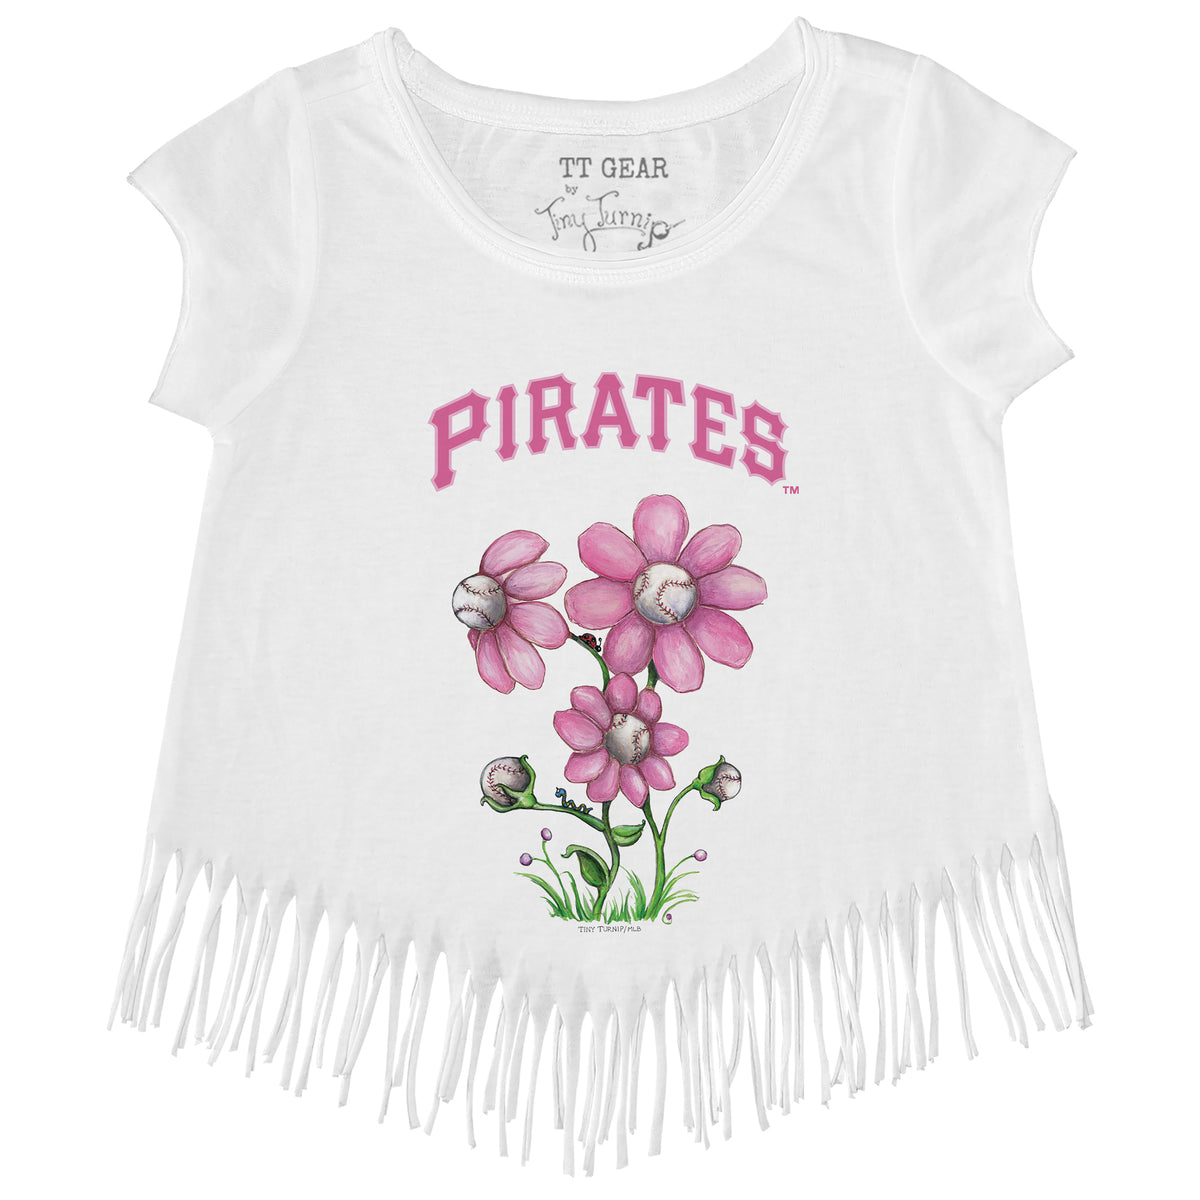 Pittsburgh Pirates Ladies Apparel, Ladies Pirates Clothing, Merchandise